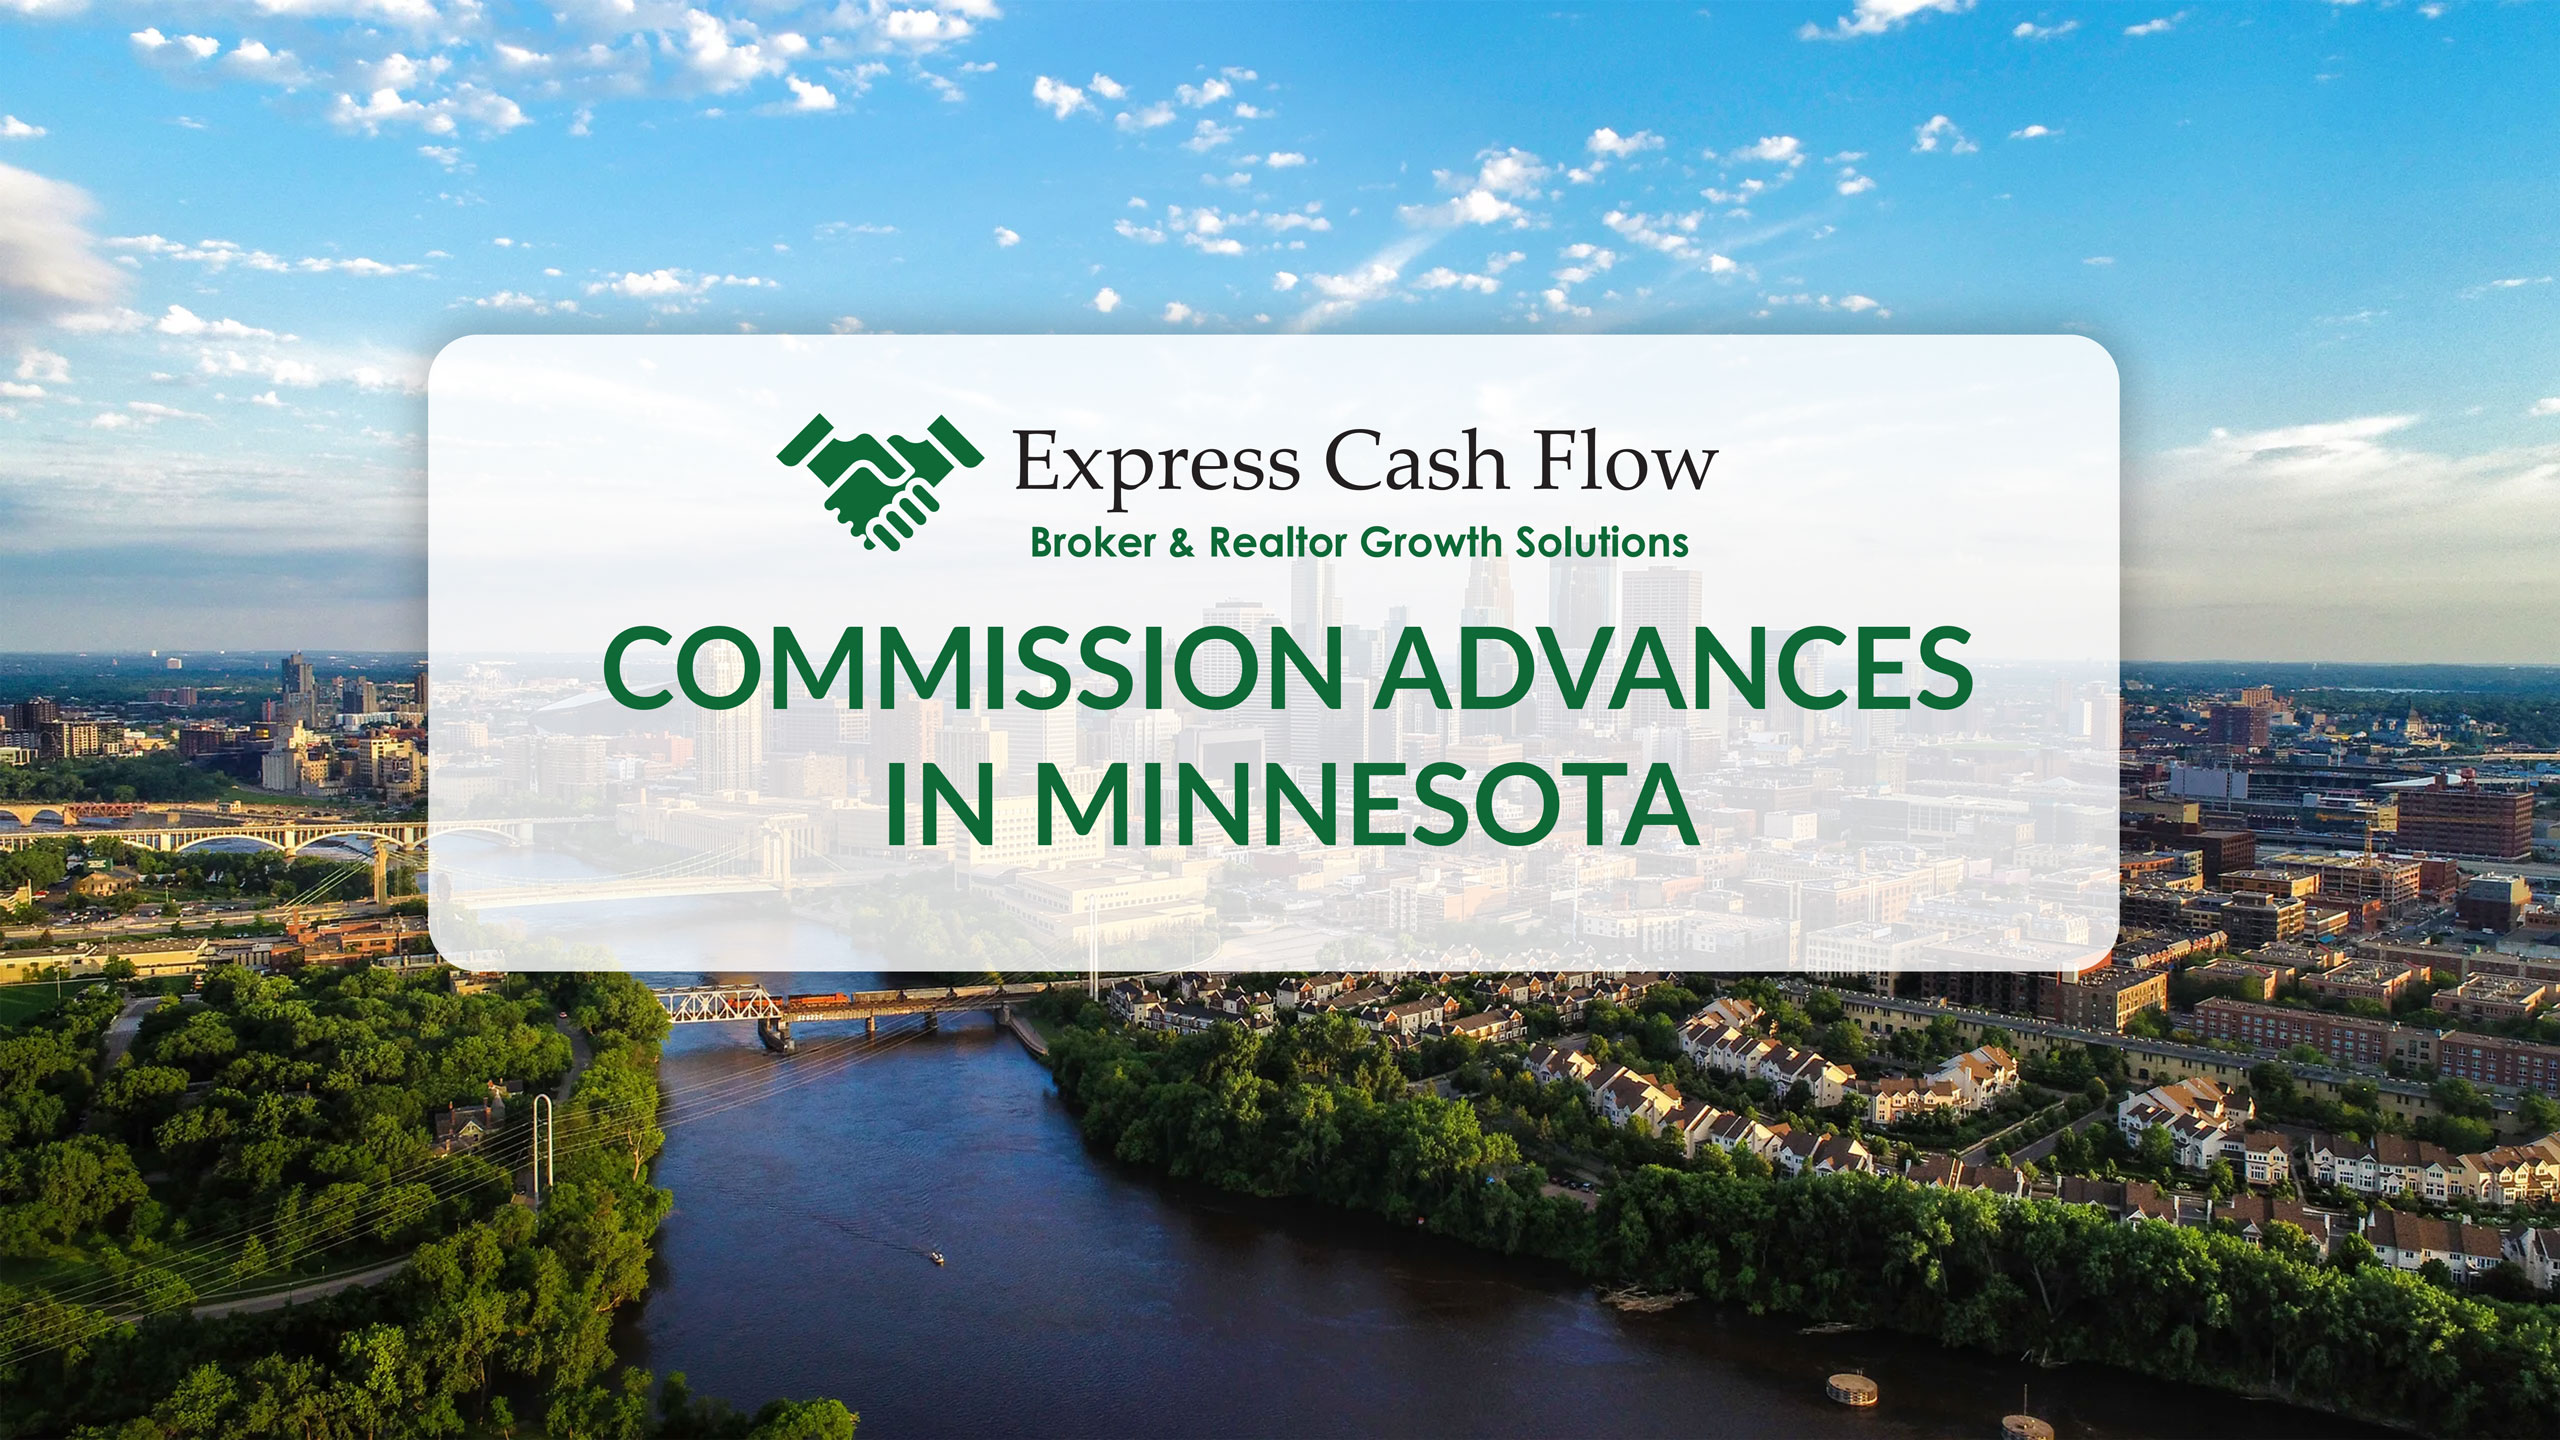 Commission-Advances-in-Minnesota sign